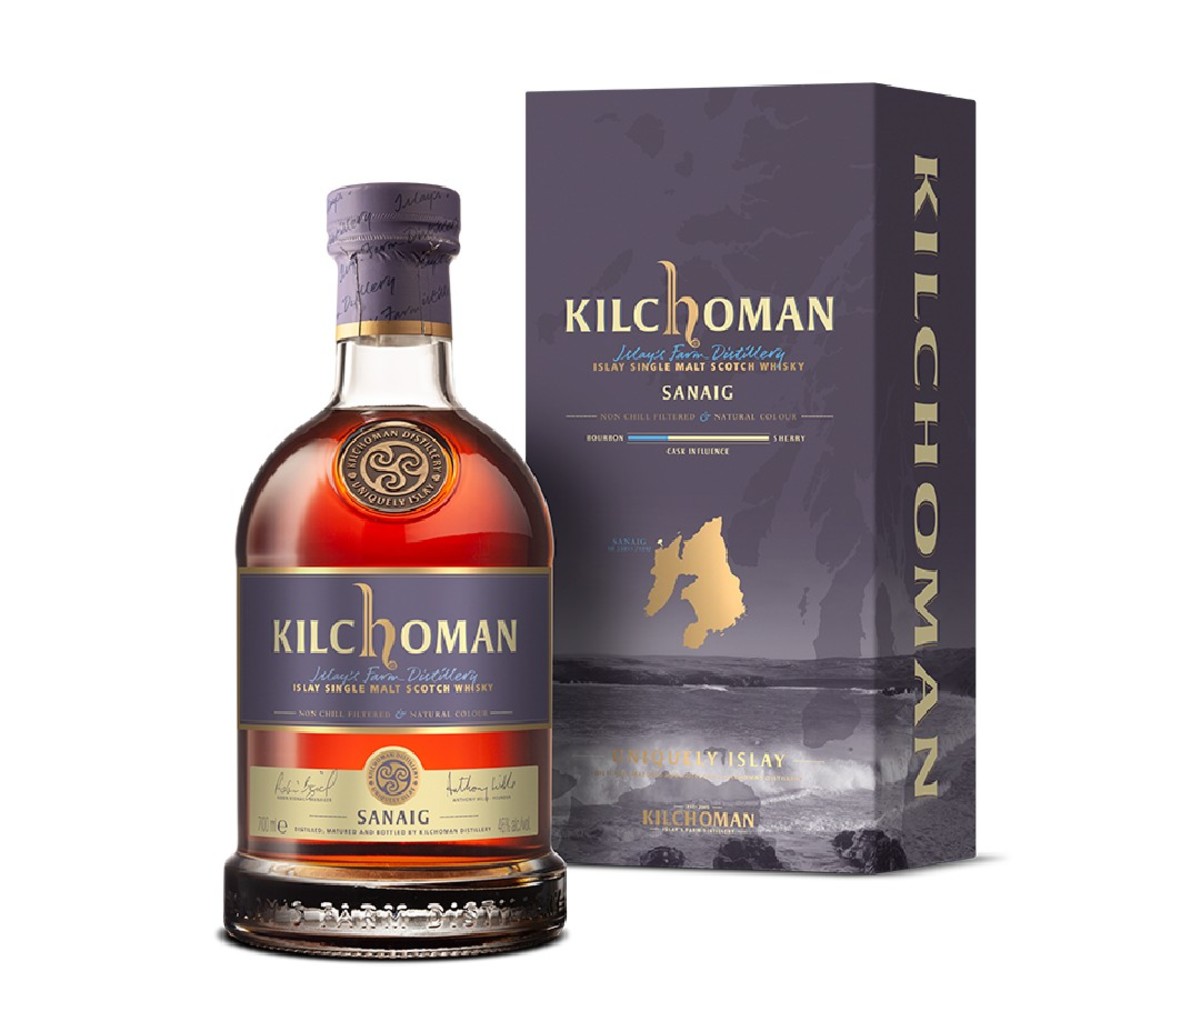 A bottle of Kilchoman Sanaig whisky.